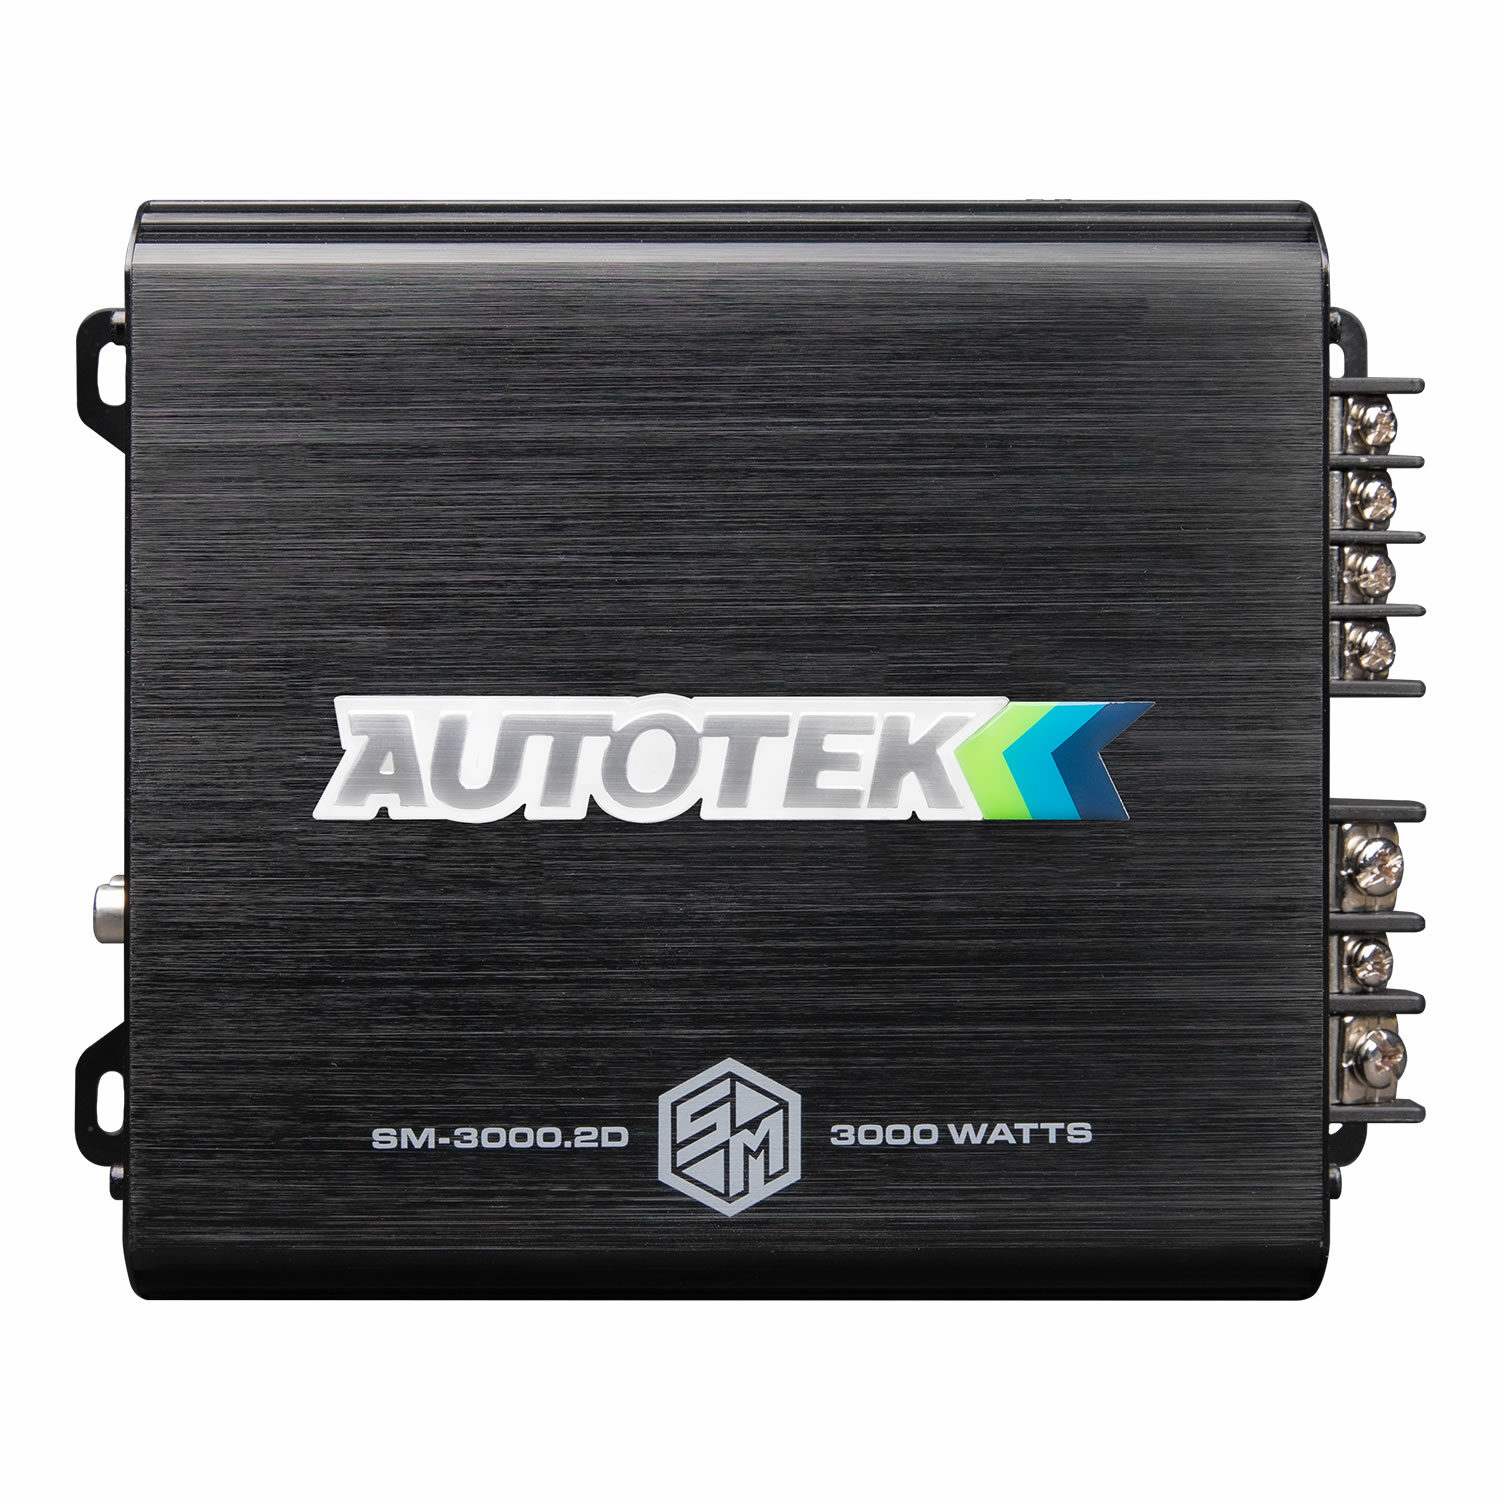 MM-1125.1D Compact MEAN MACHINE 1100 Watt Amplifier | Autotek